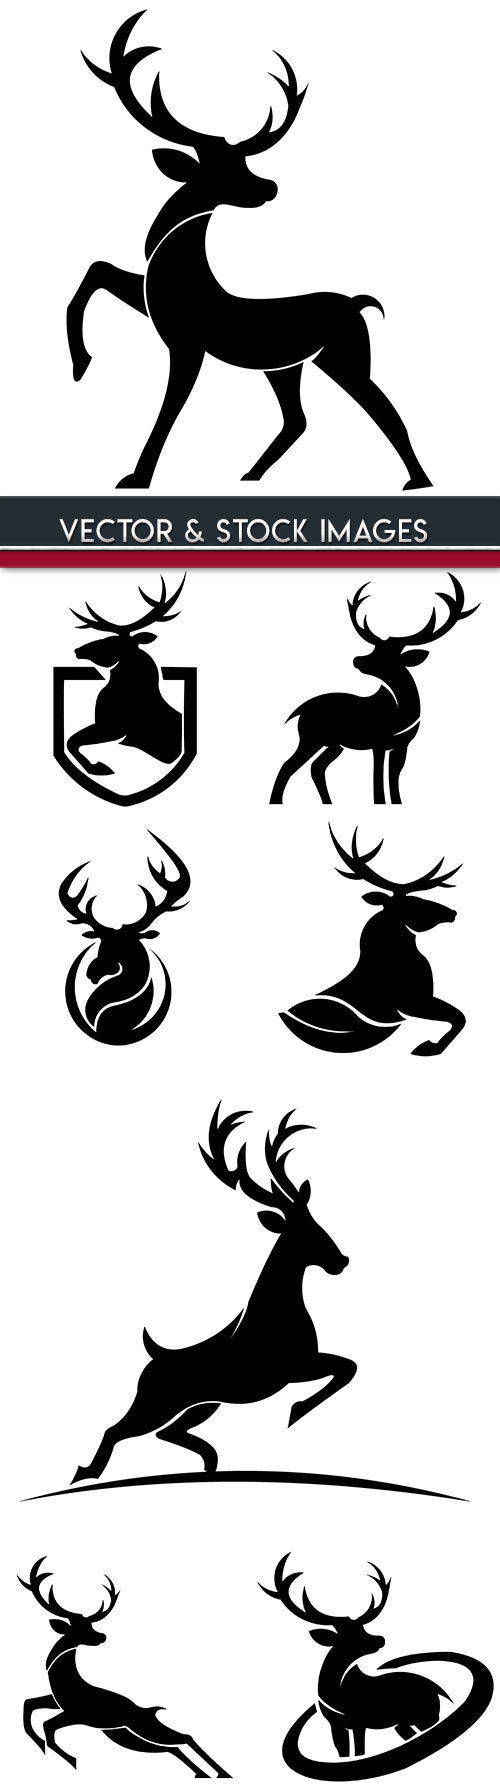 Christmas deer silhouette design illustrations